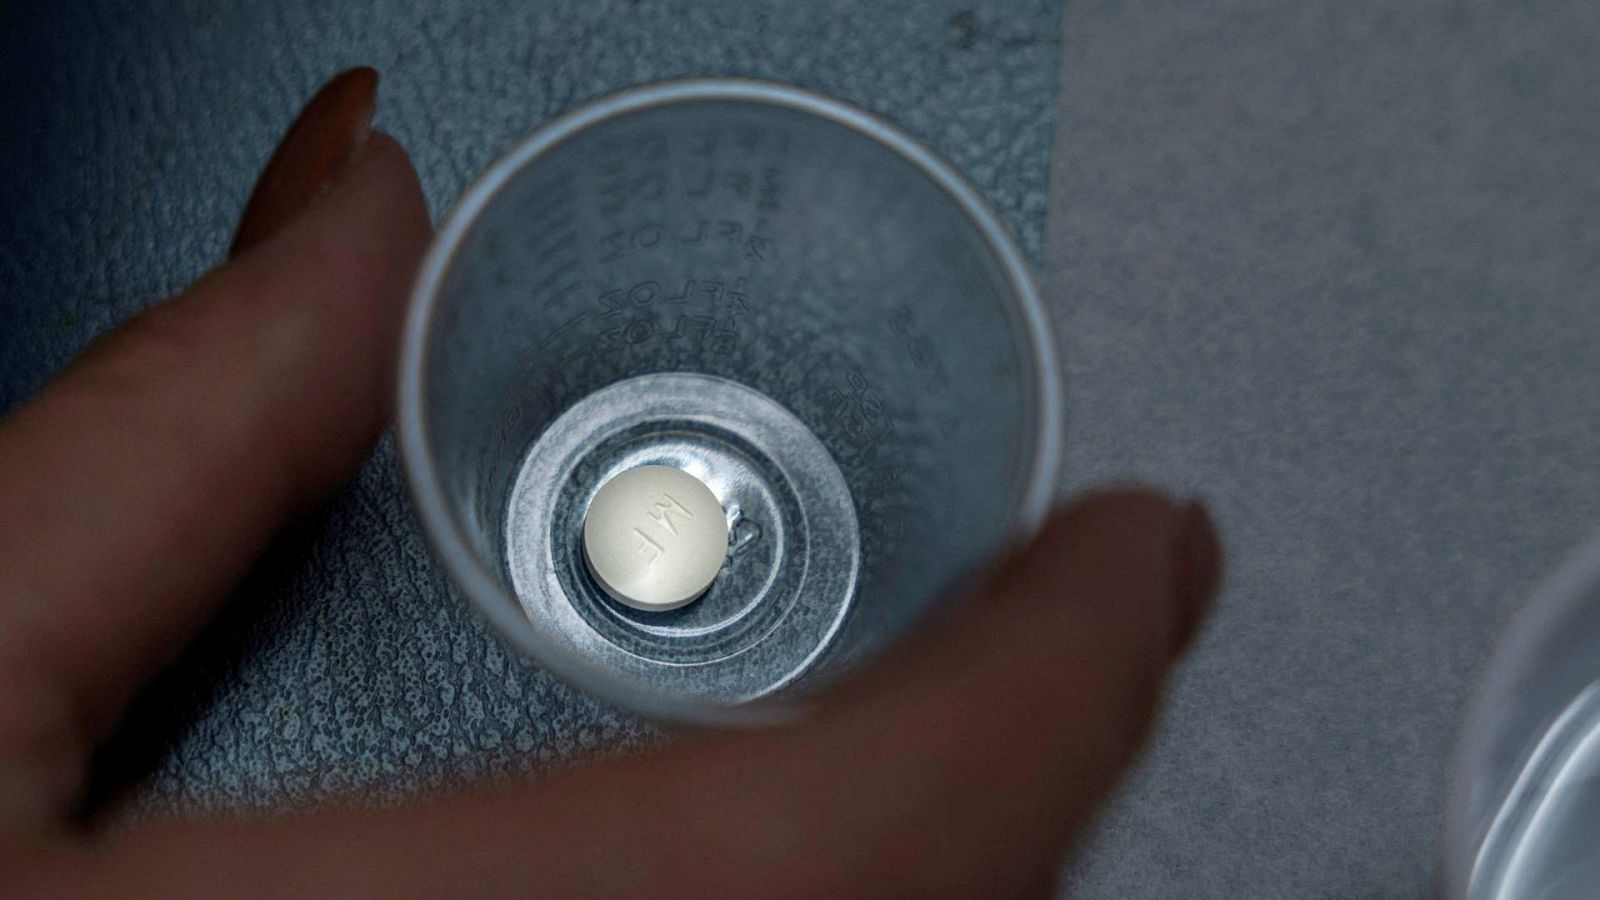 Una imagen de una píldora abortiva mifepristona.